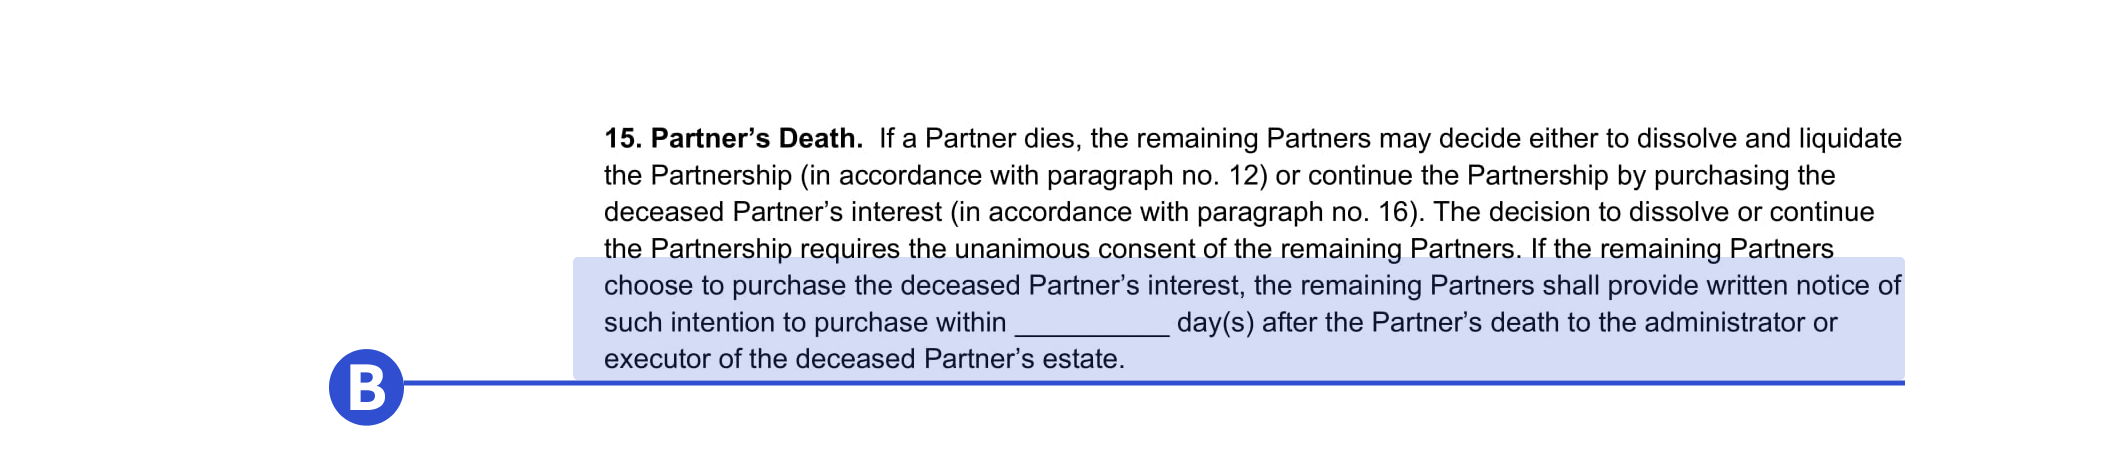 partnership agreement partner death details